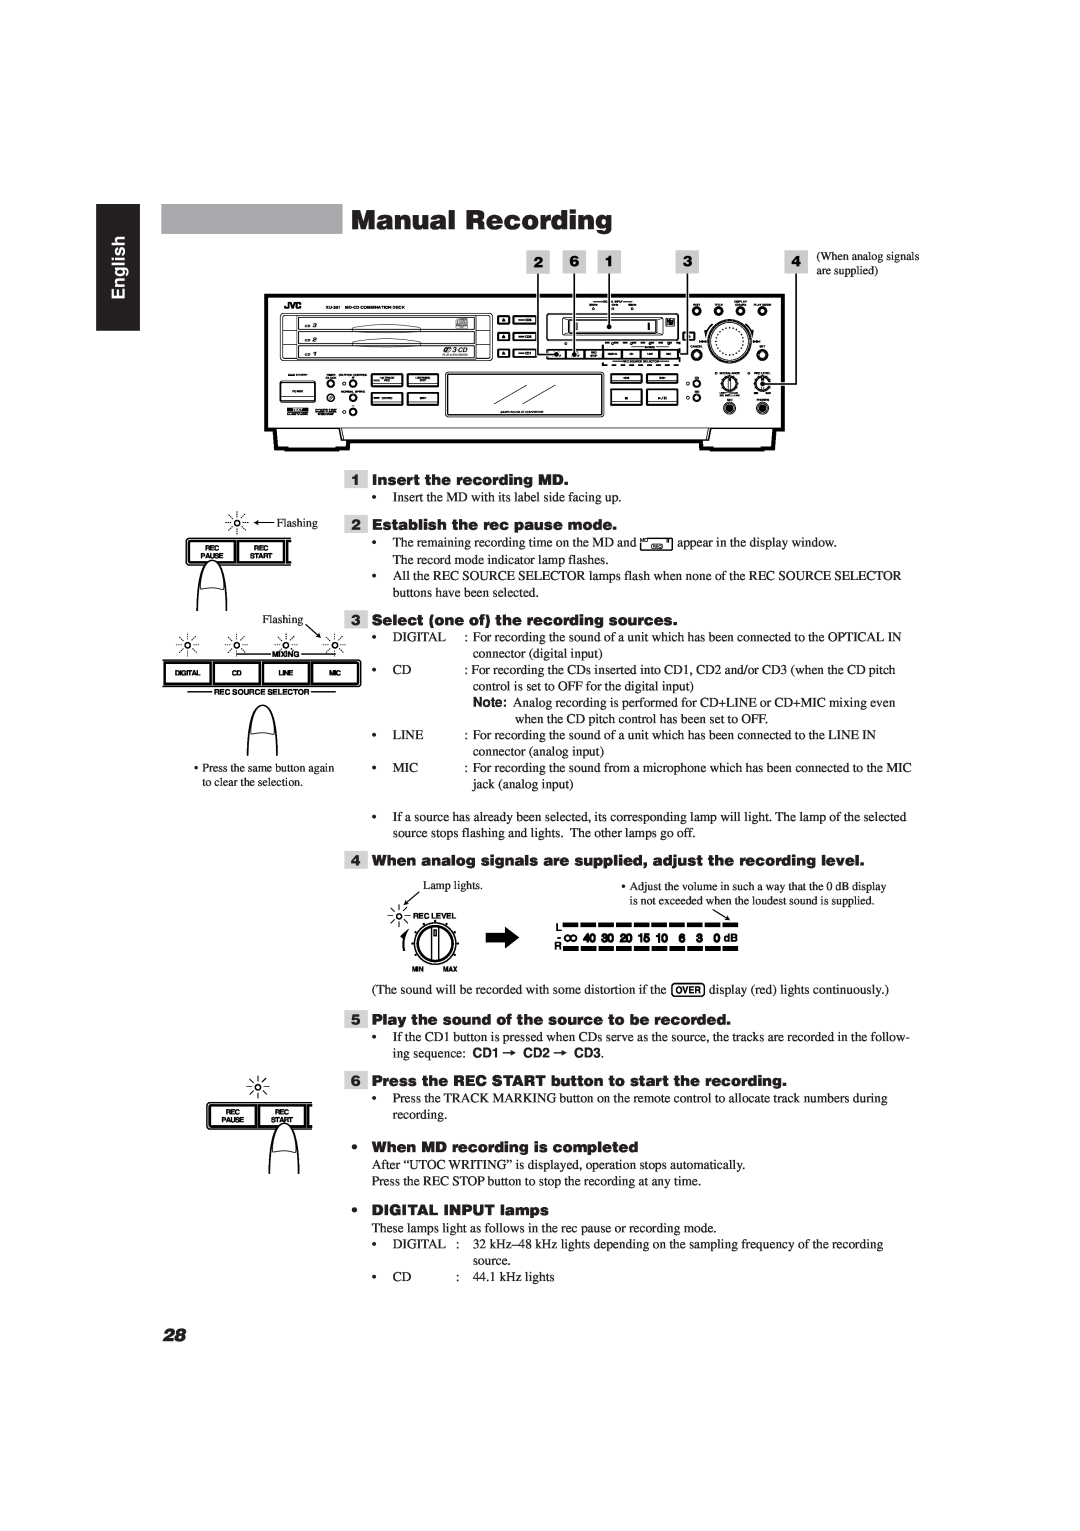 JVC XU-301 manual Manual Recording, English 